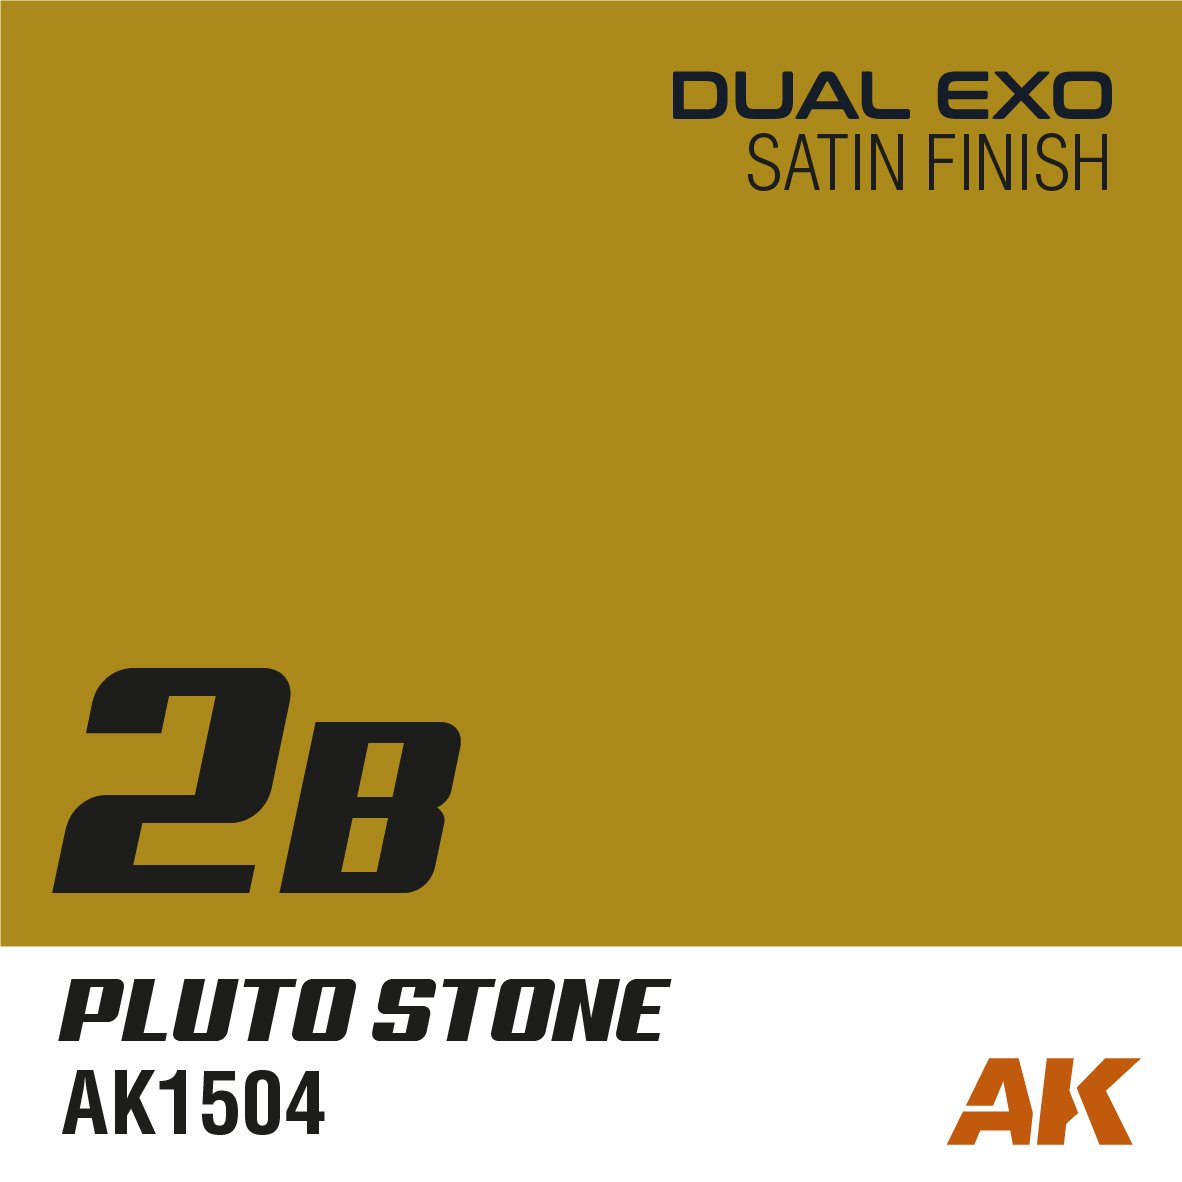 Dual Exo 2B - Pluto Stone